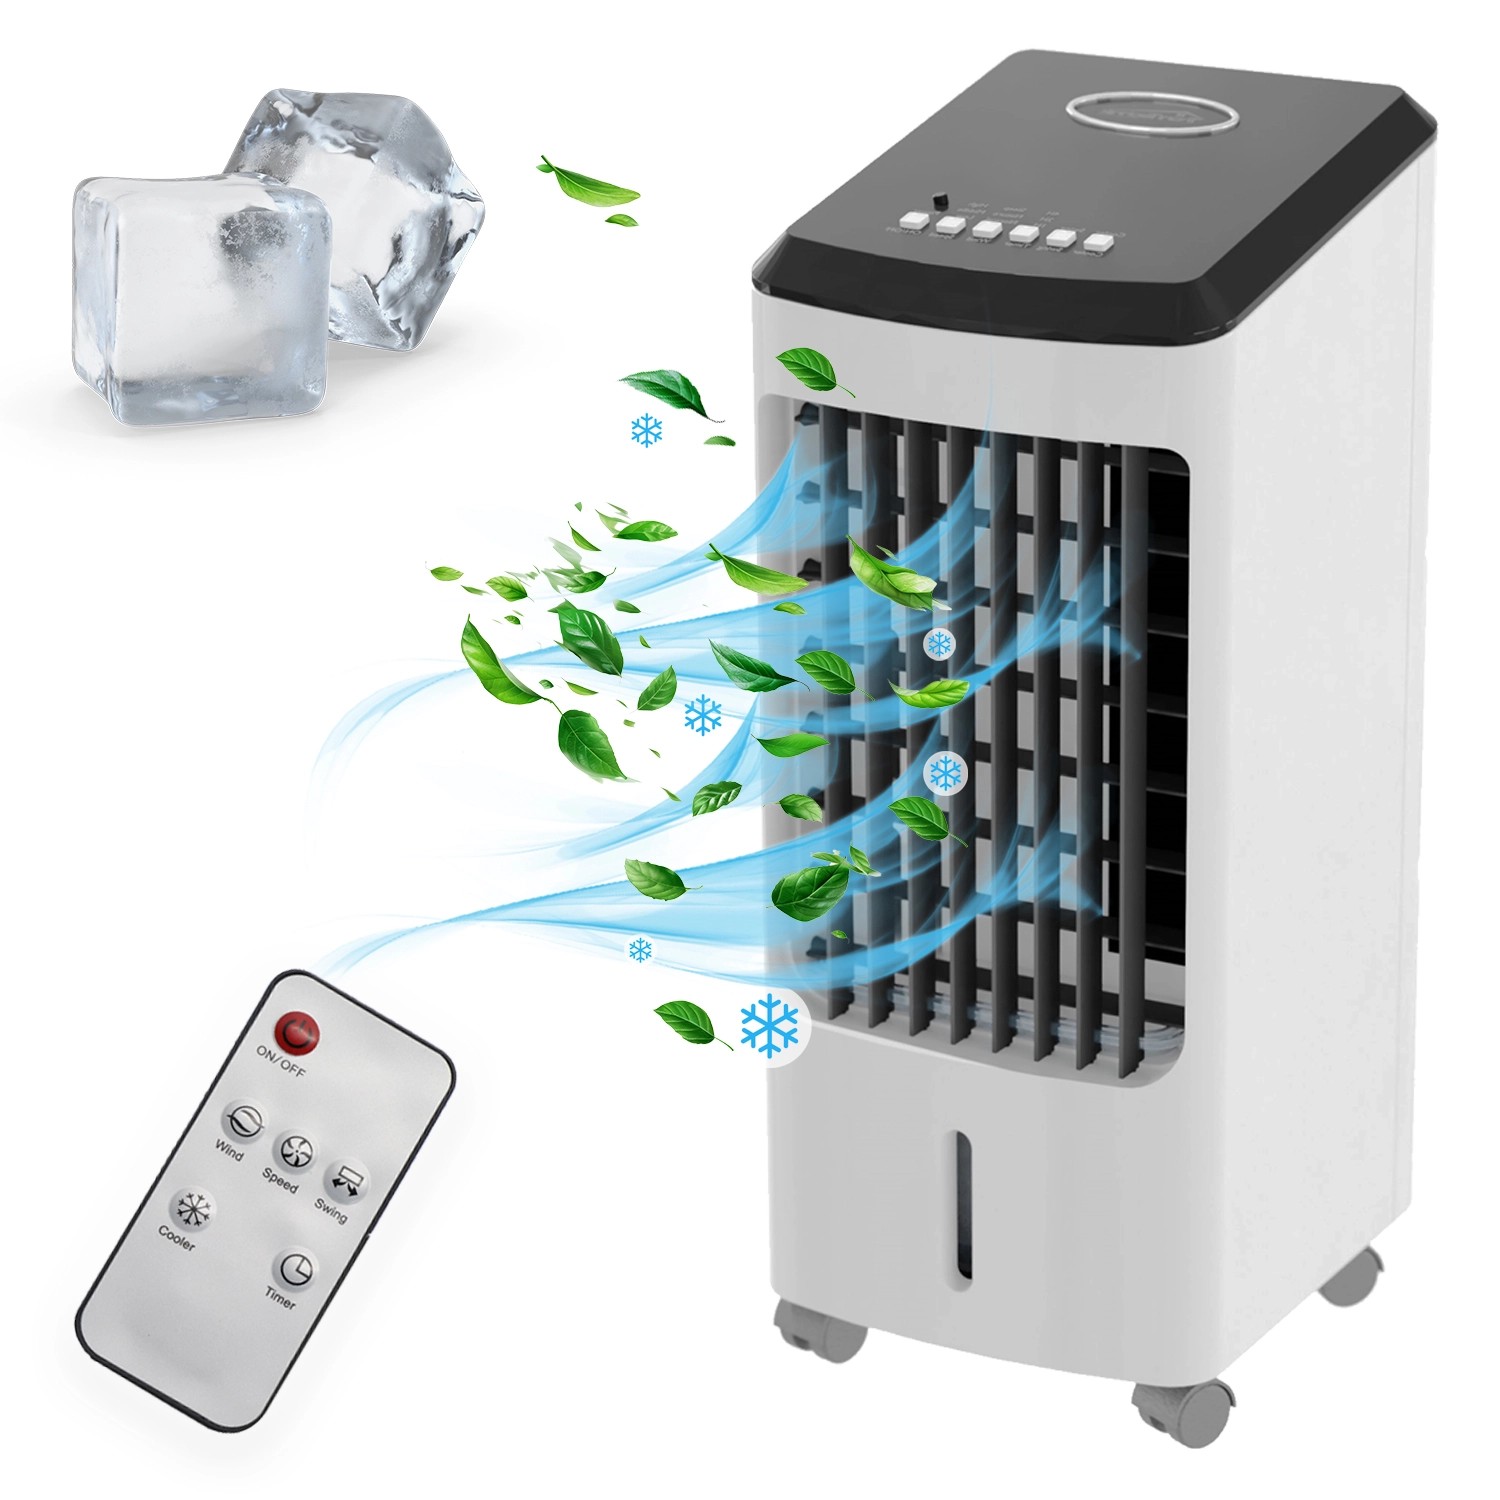 Tronitechnik Mobiles Klimageraet 4In1 Klimaanlage Luftkühler Lk03 Ventilatorinkl Fernbedienung Filter3In1 Air Cooler